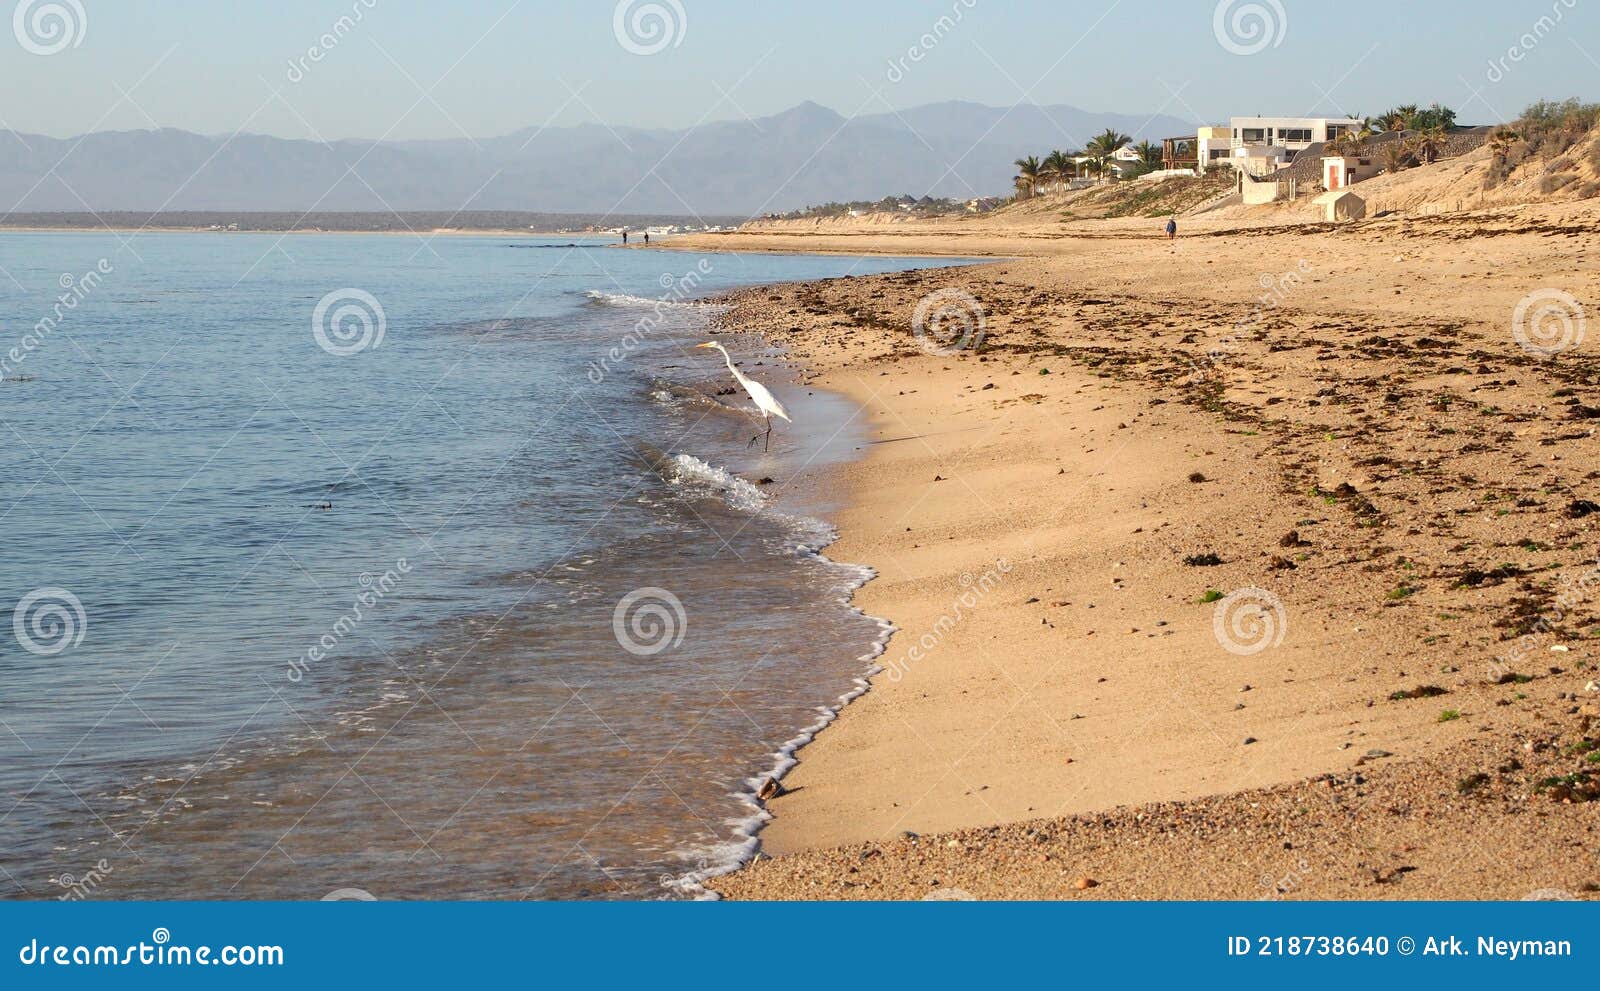 sandy beach on the shore of the sea of cortes, la ventana bay, bcs, mexico